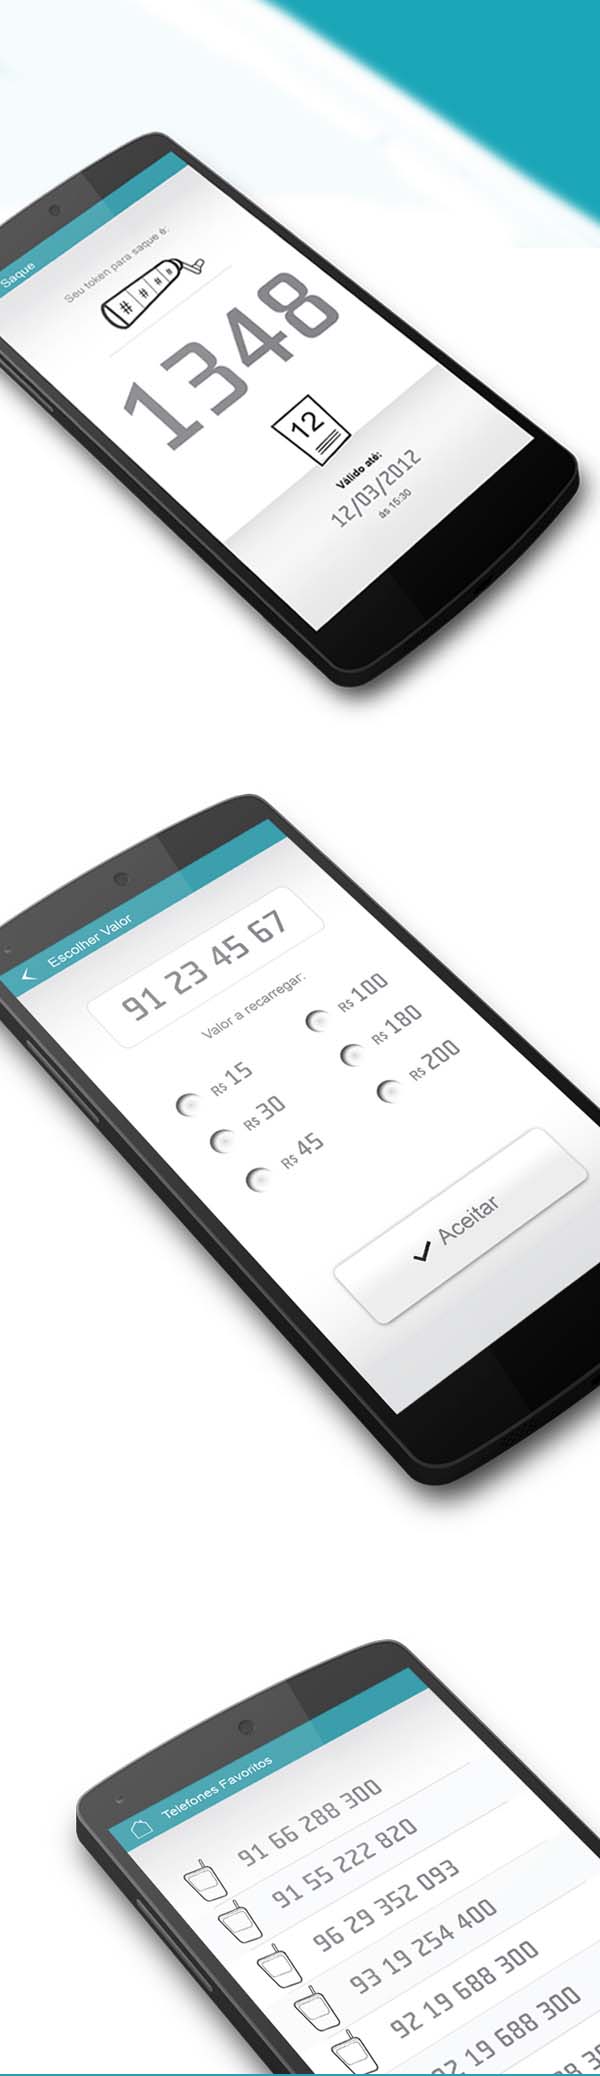 Mobile UI | Mobile Banking